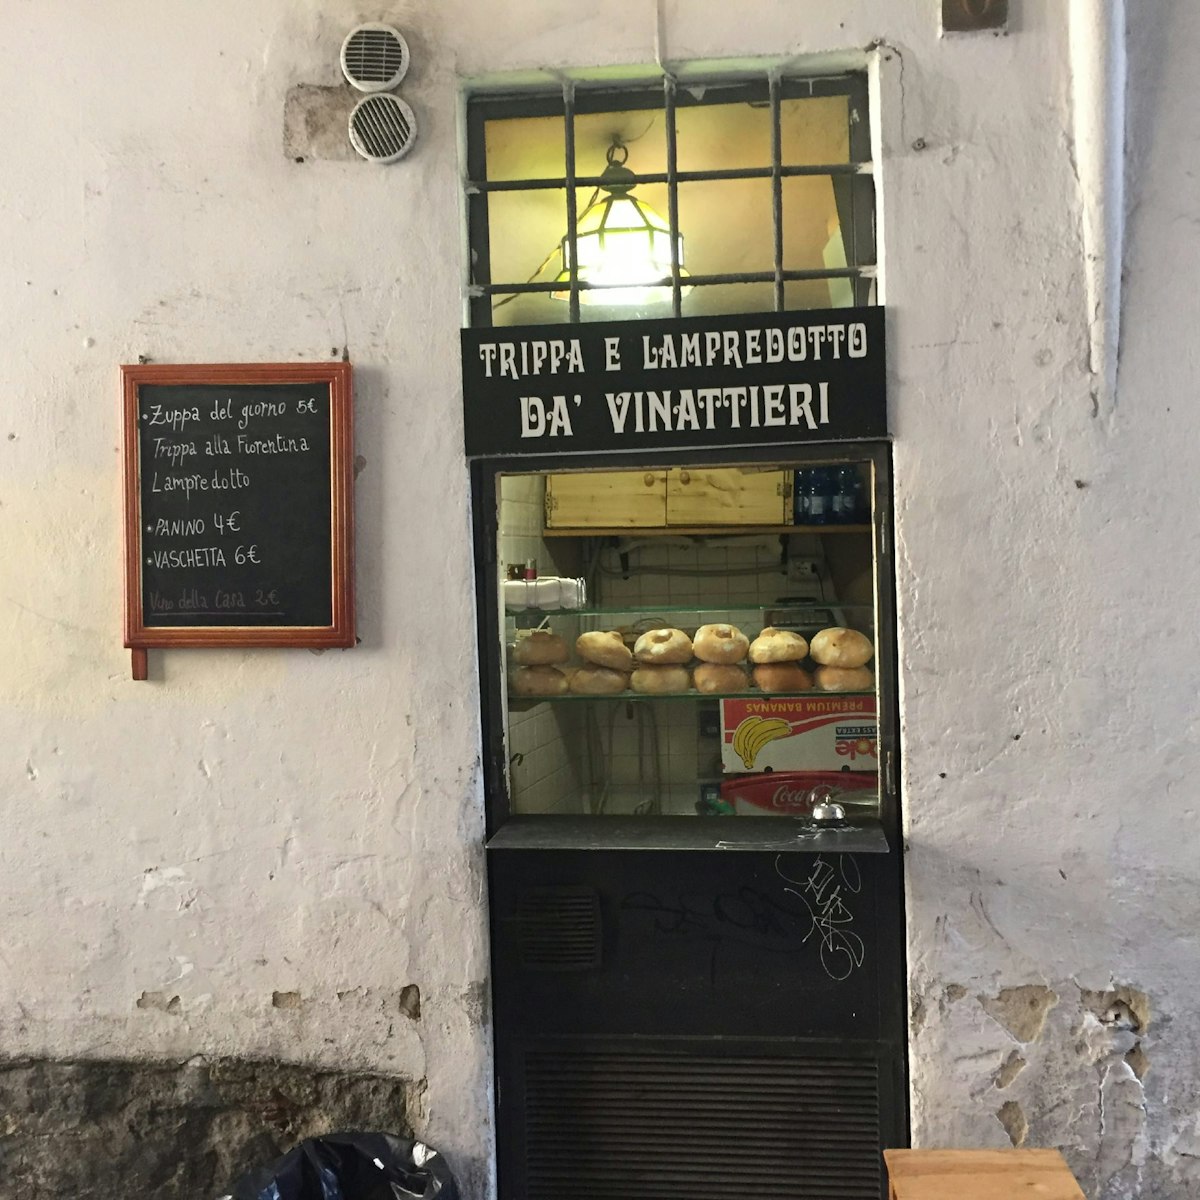 Da Vinattieri Shop front from via Santa Margherita